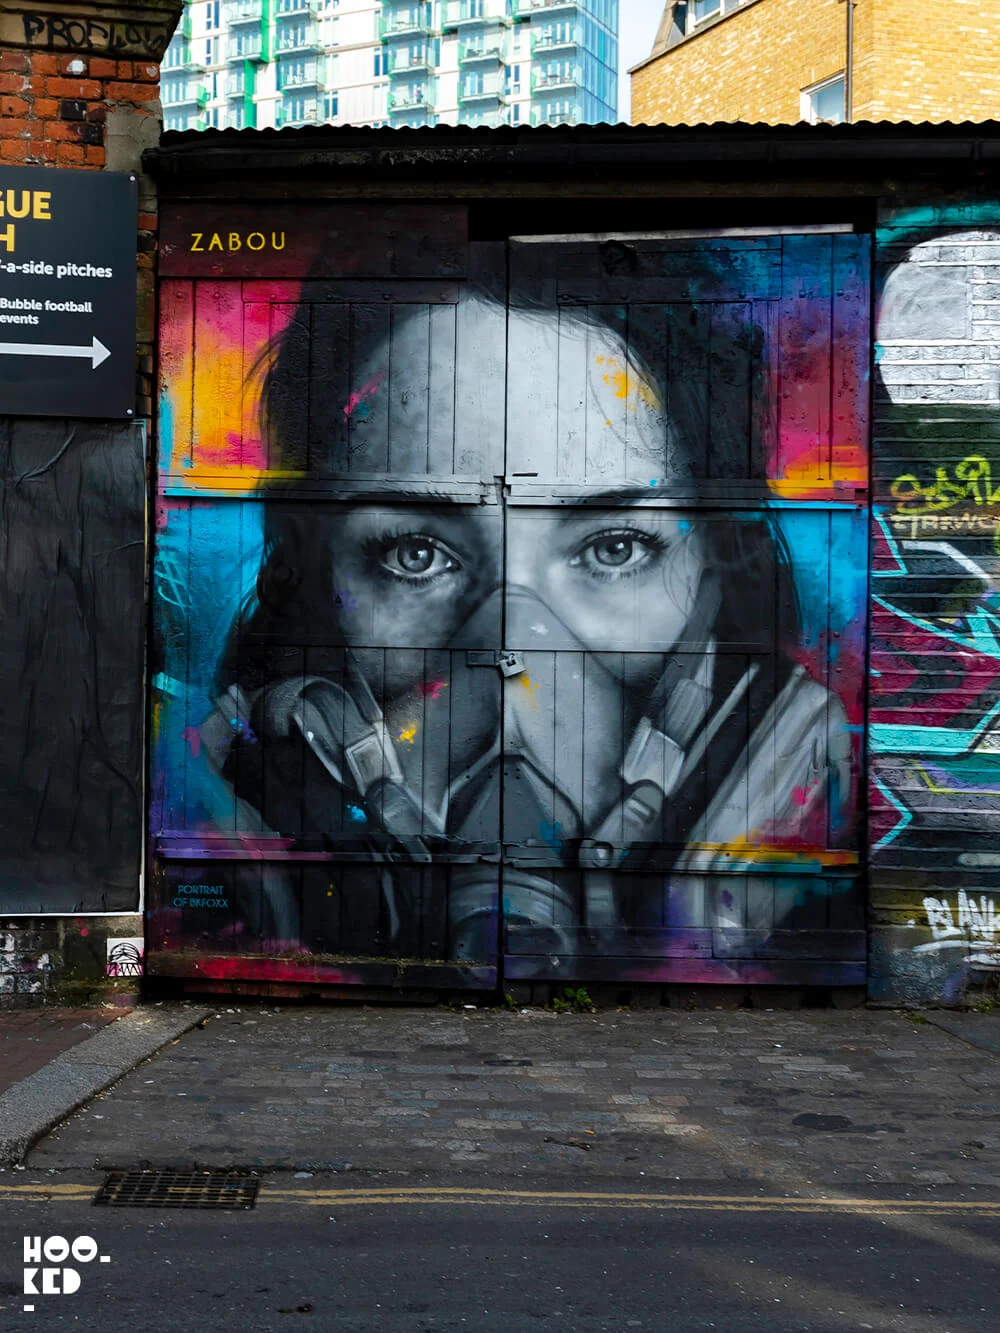 London Street art on Brick Lane by street artist Zabou